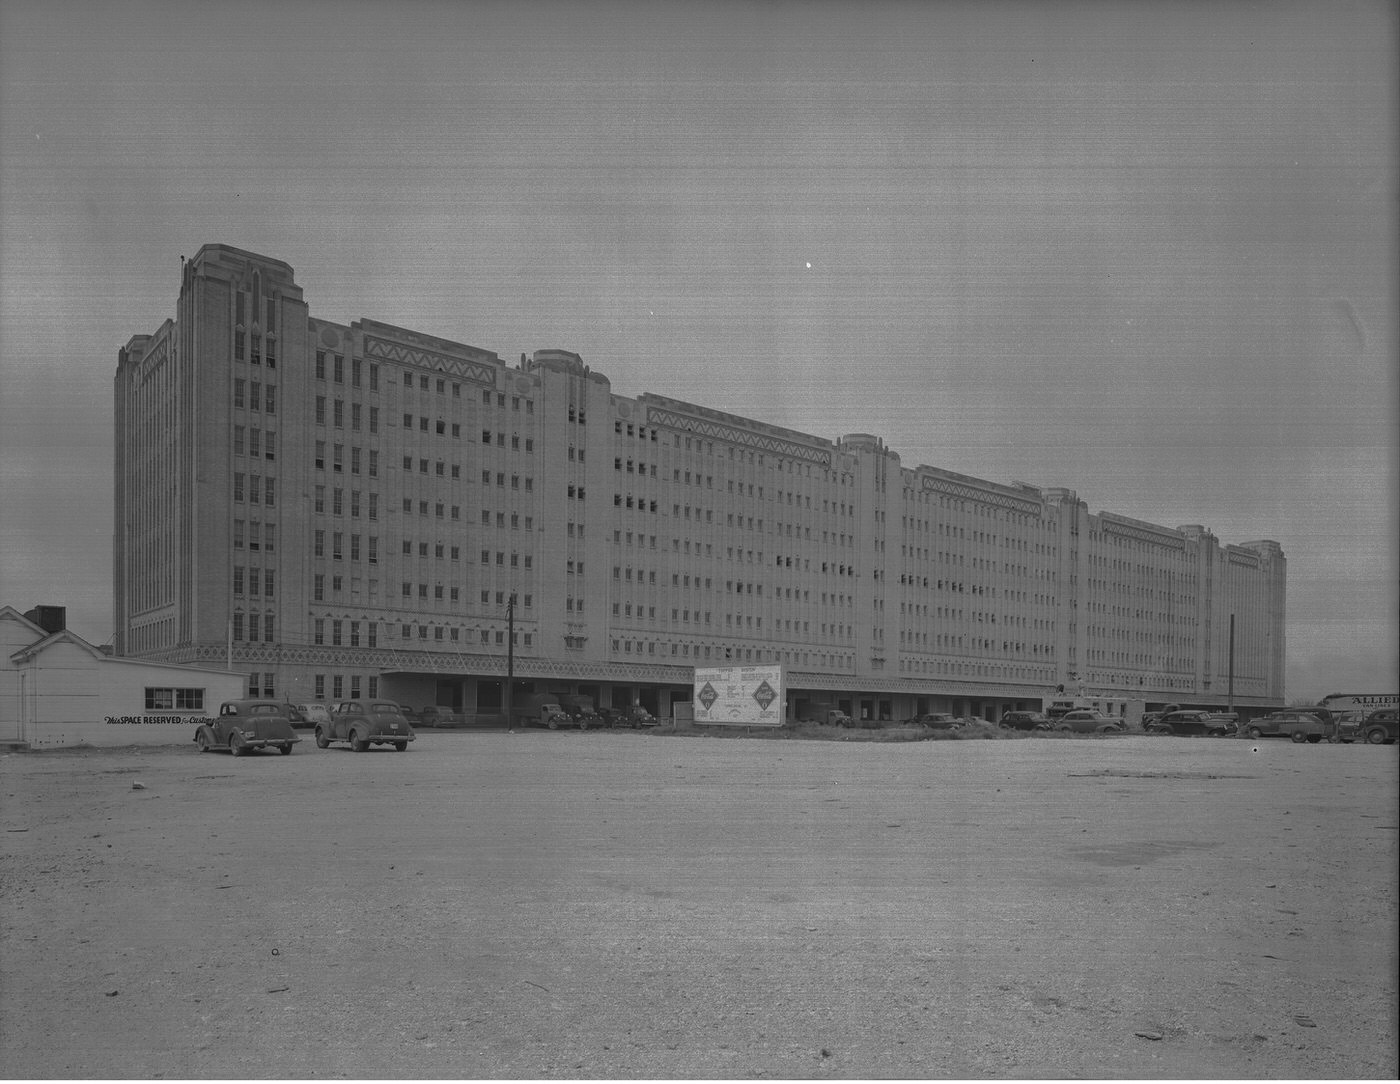 The Texas & Pacific terminal warehouse, 1940